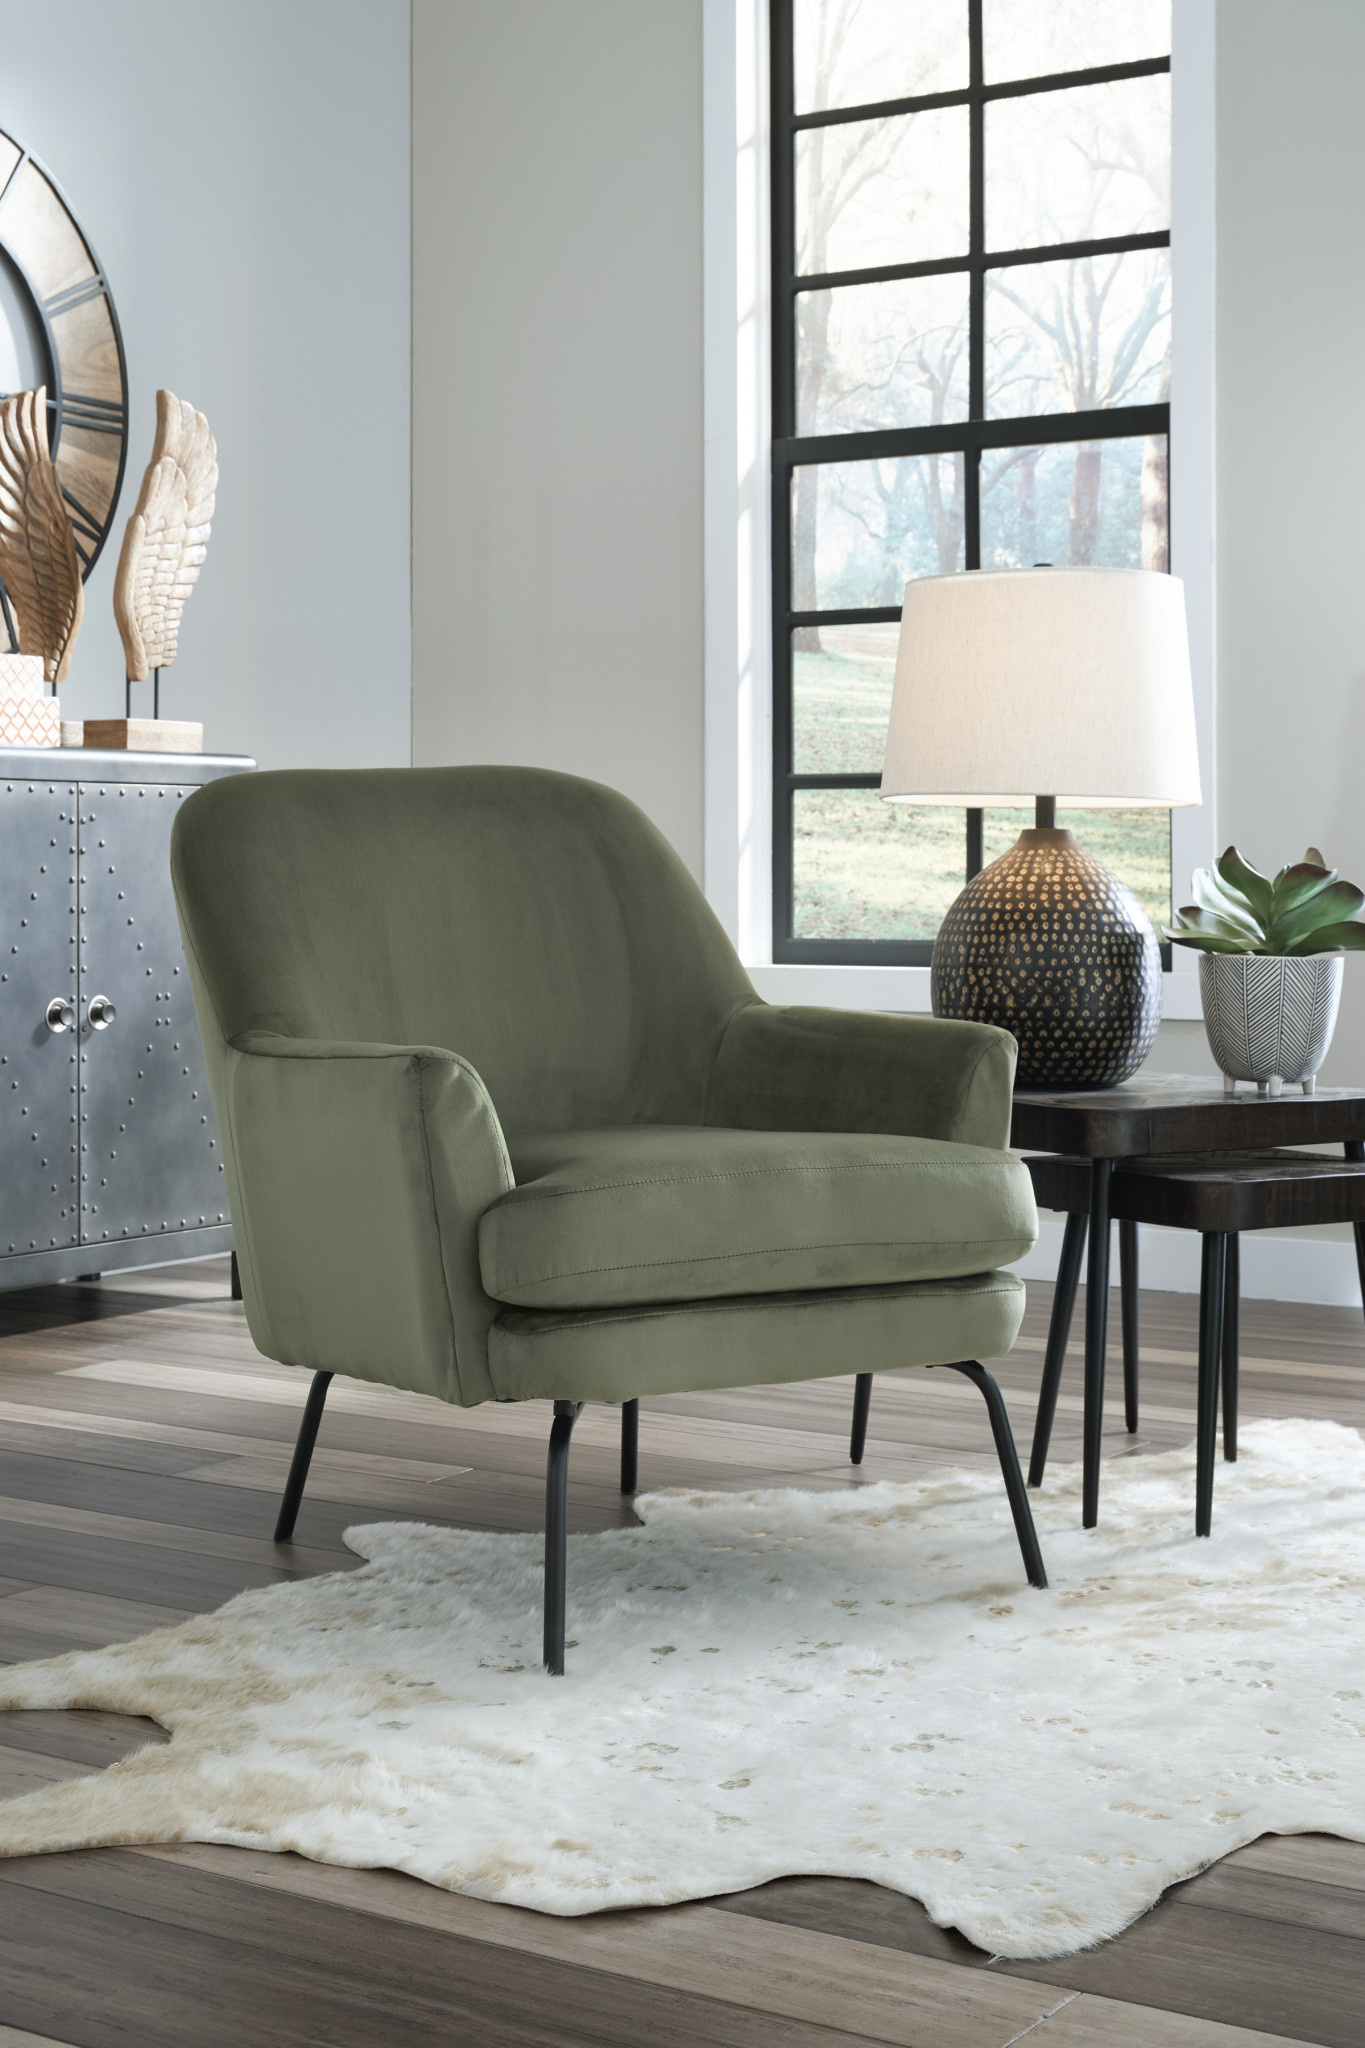 Signature Design Accent Chair- "Dericka"- Moss color A3000235